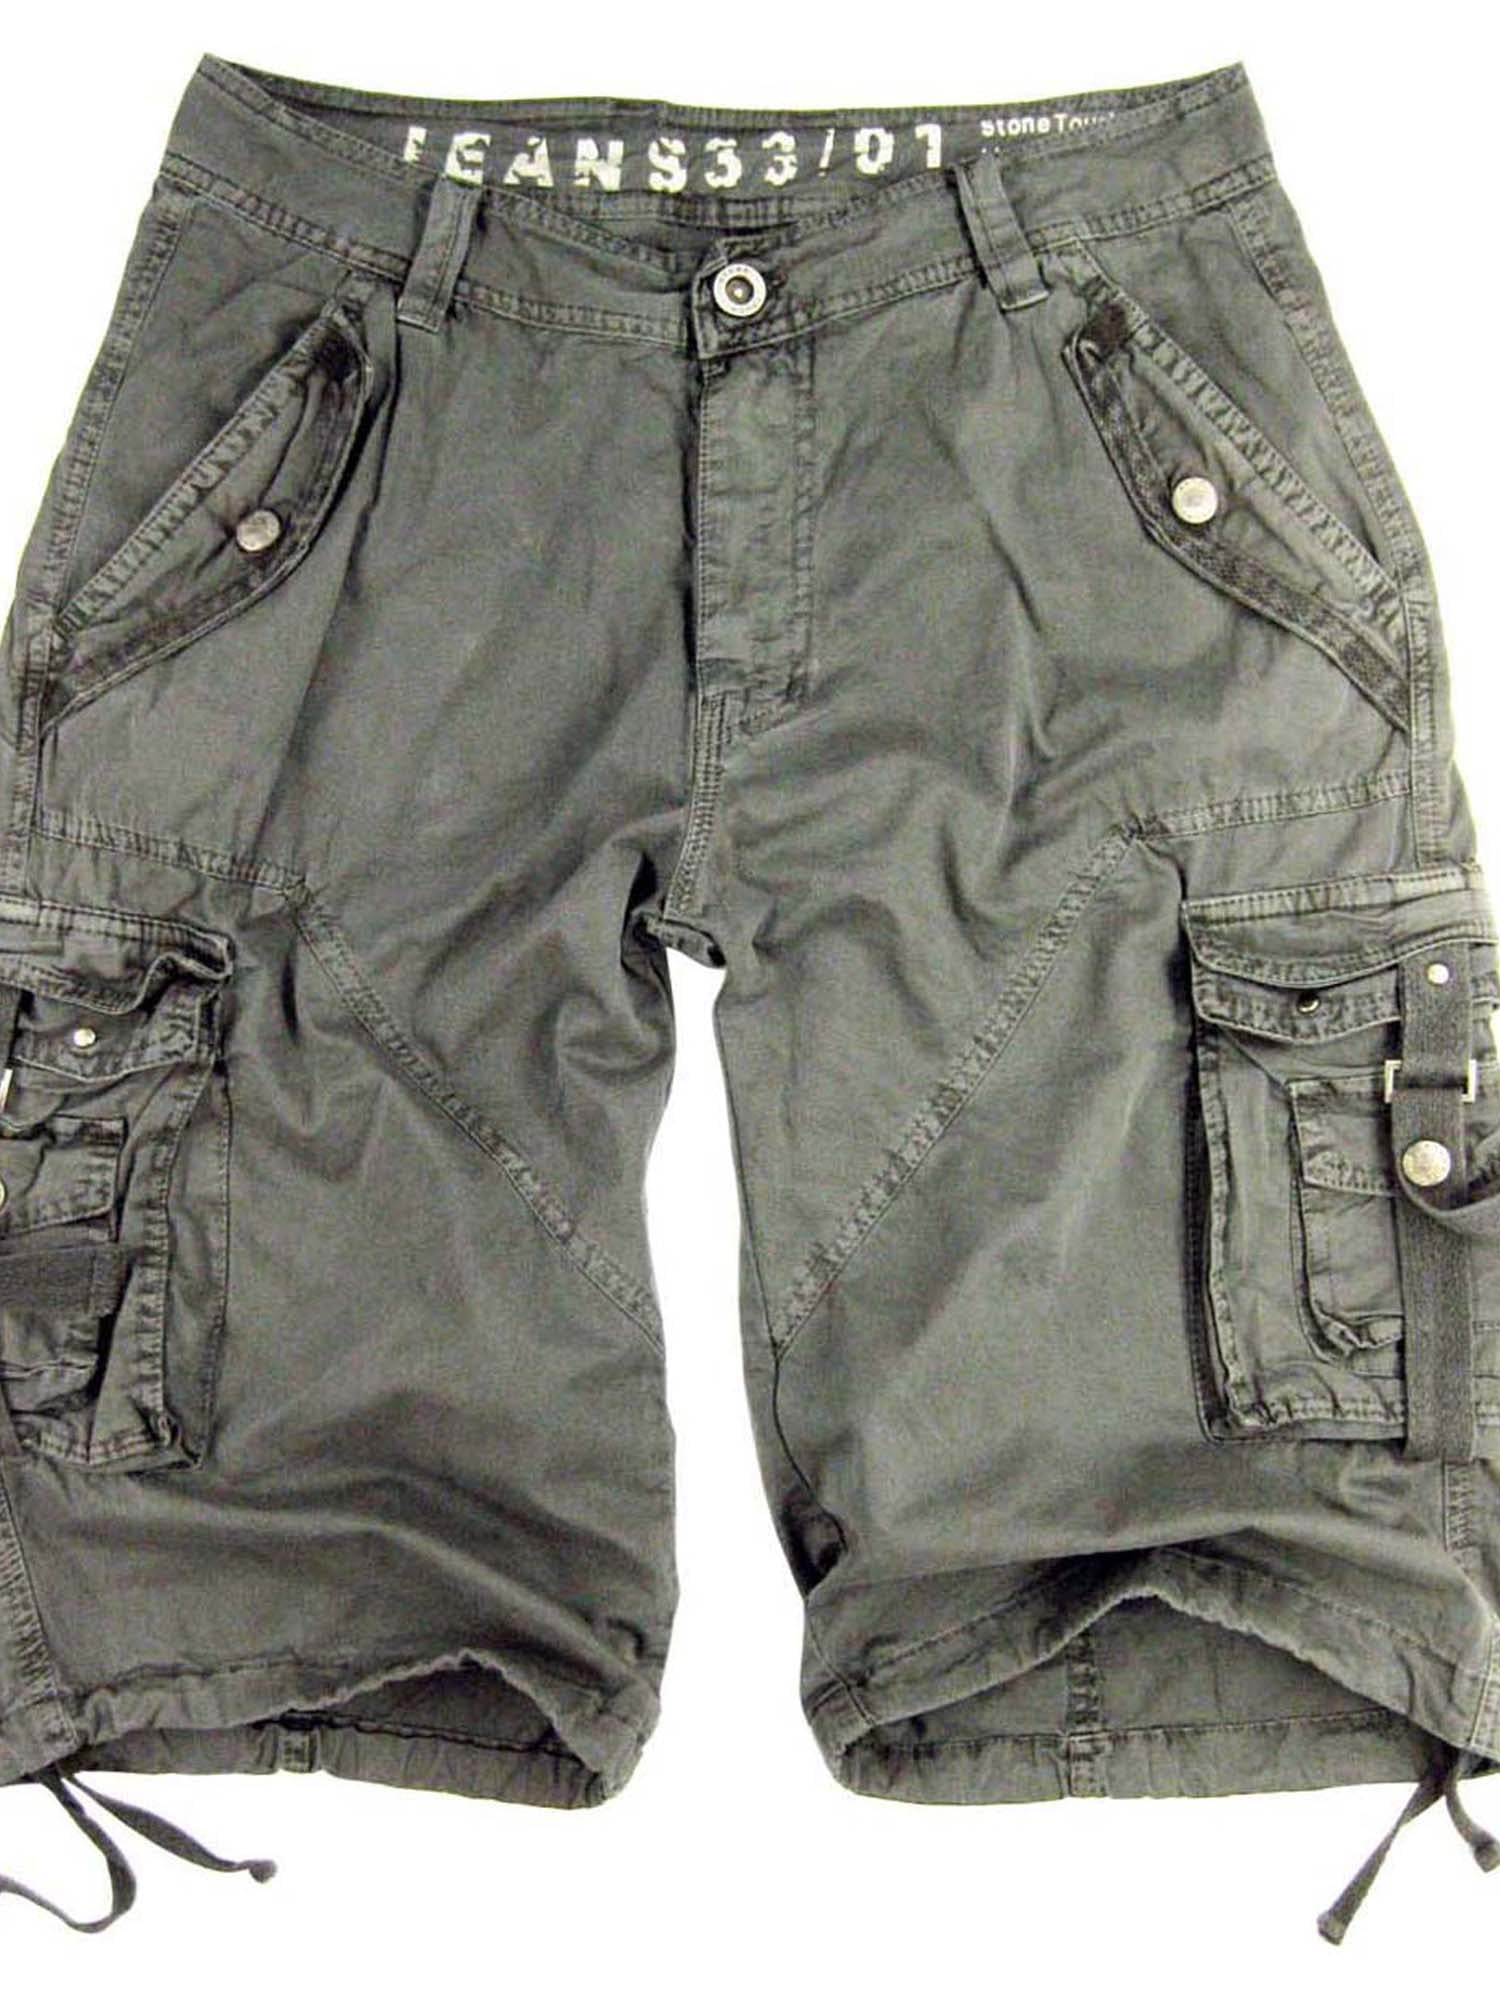 Mens Military Style Light Grey Cargo Shorts #A8s Size 54 - Walmart.com